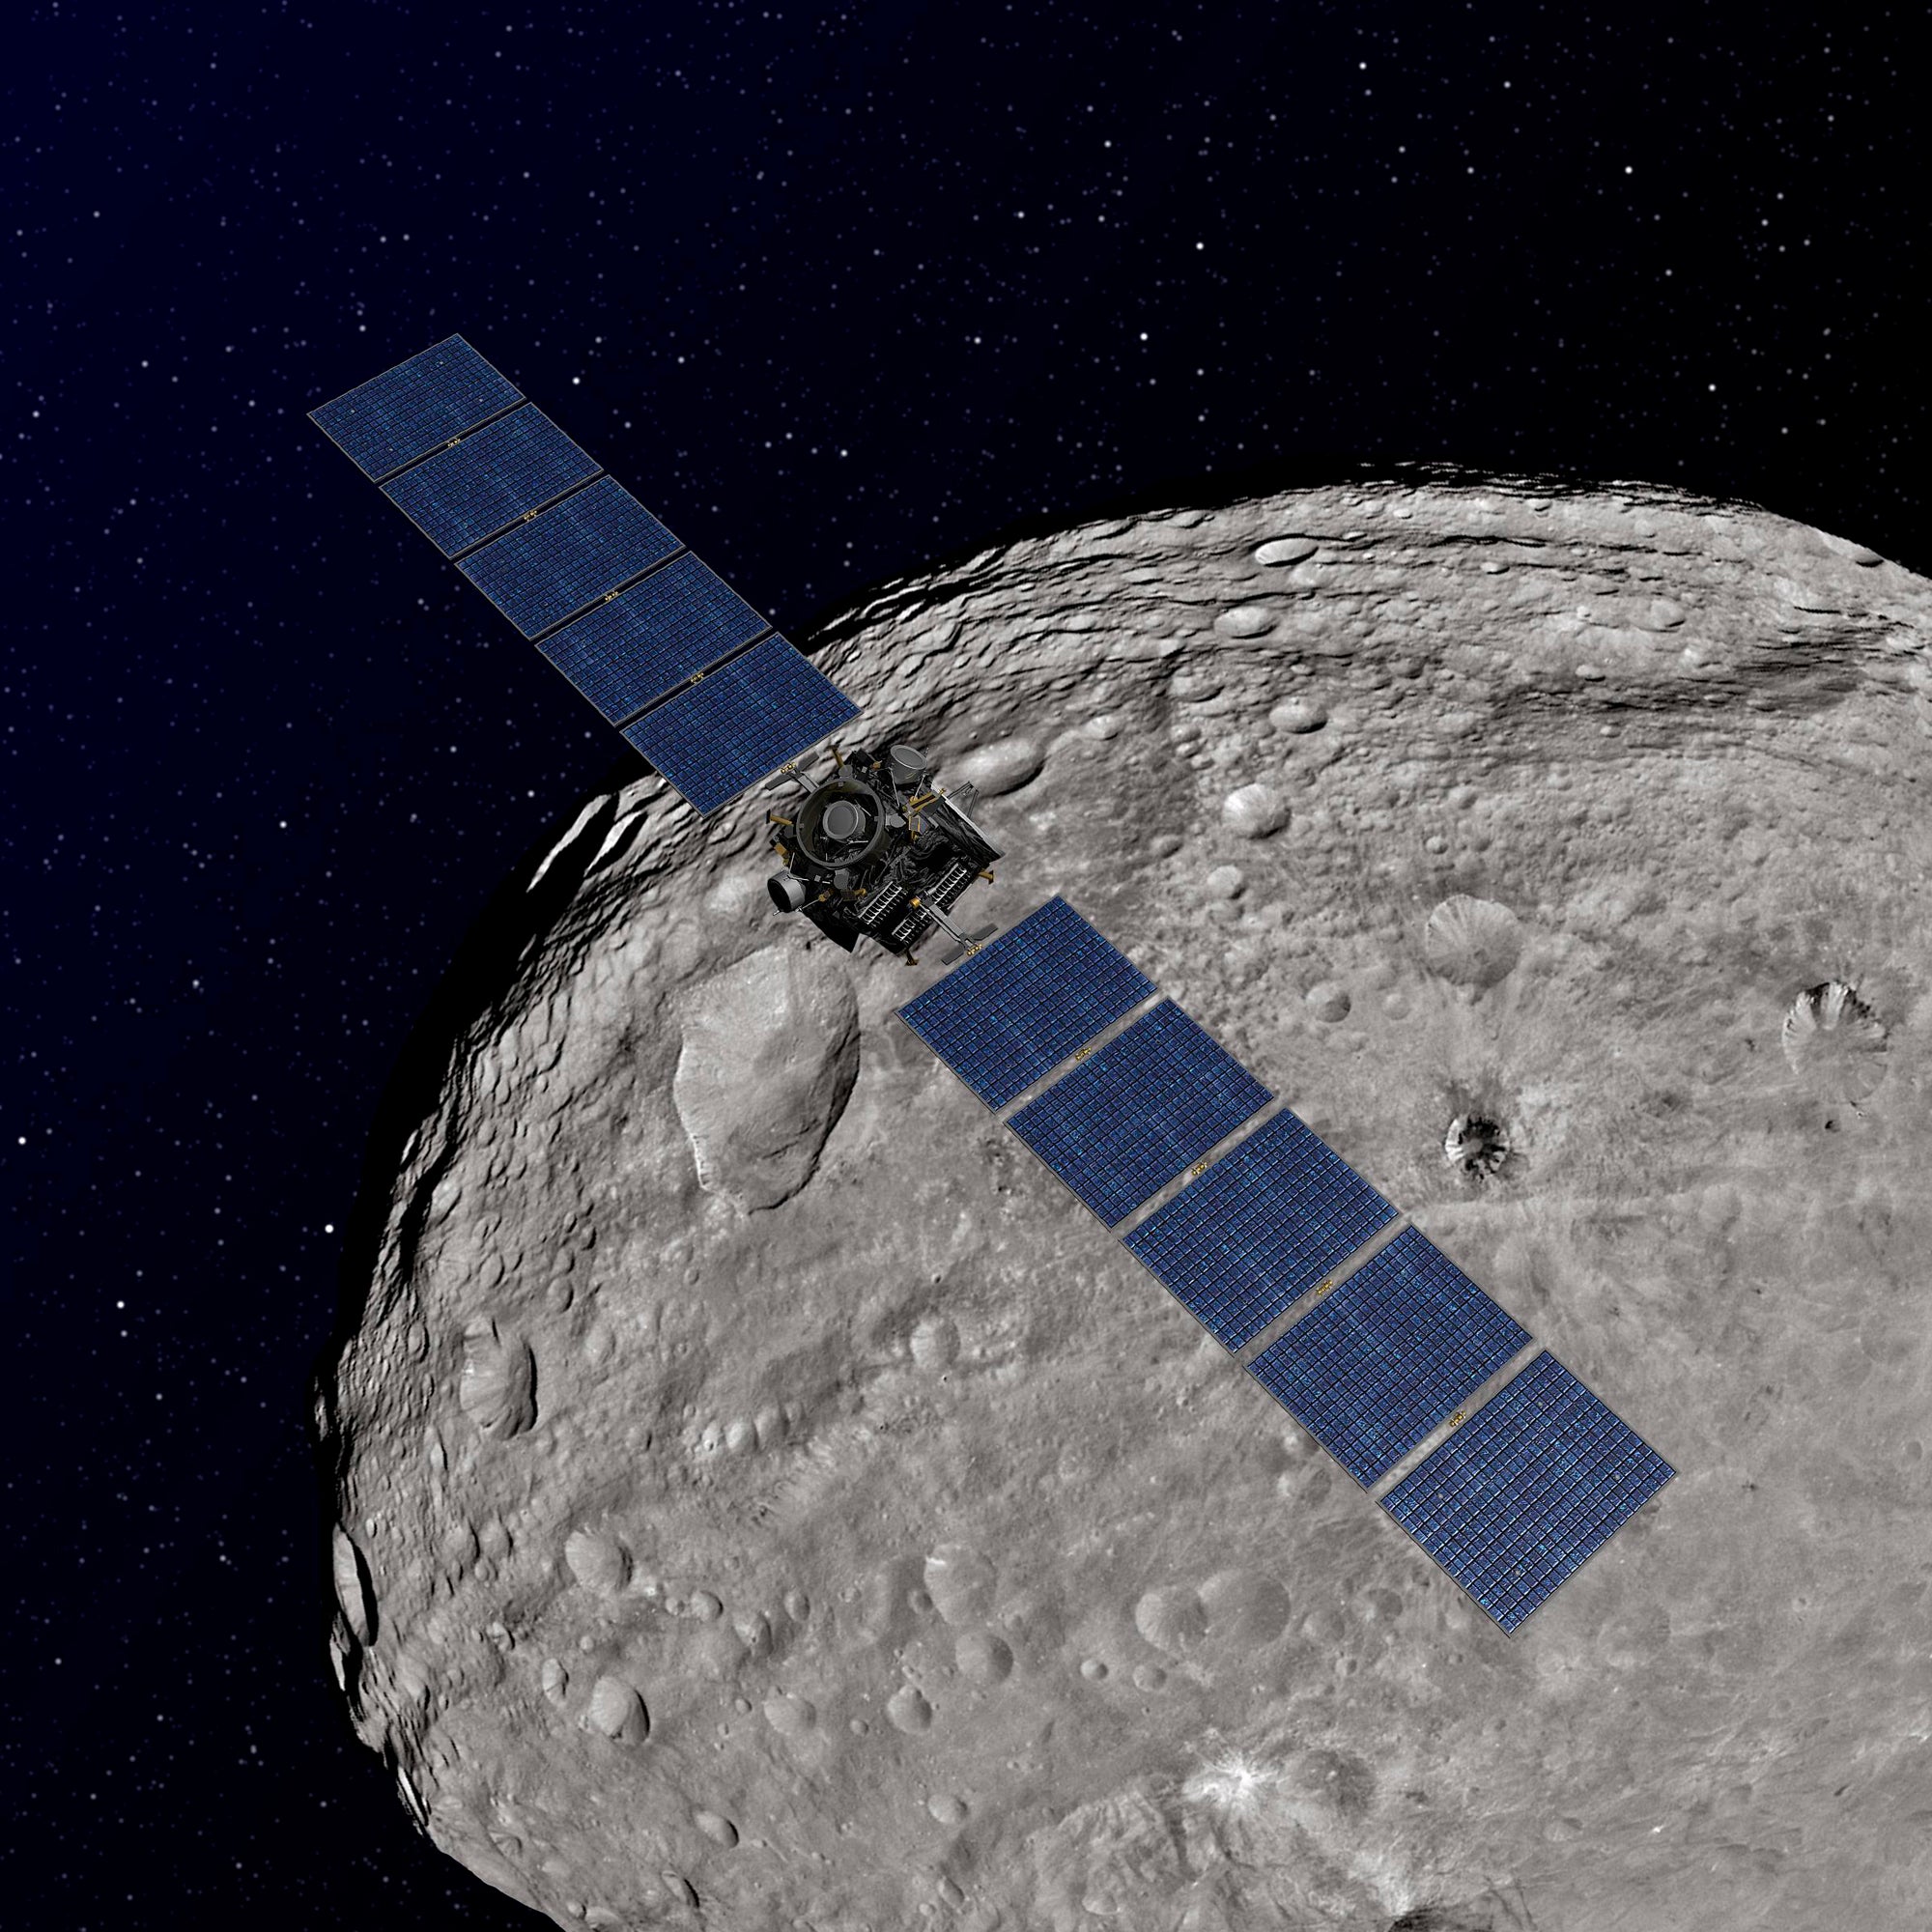 An artist's concept shows NASA's Dawn spacecraft orbiting the giant asteroid Vesta, as released by NASA December 12, 2011. REUTERS/NASA/JPL-Caltech/Handout